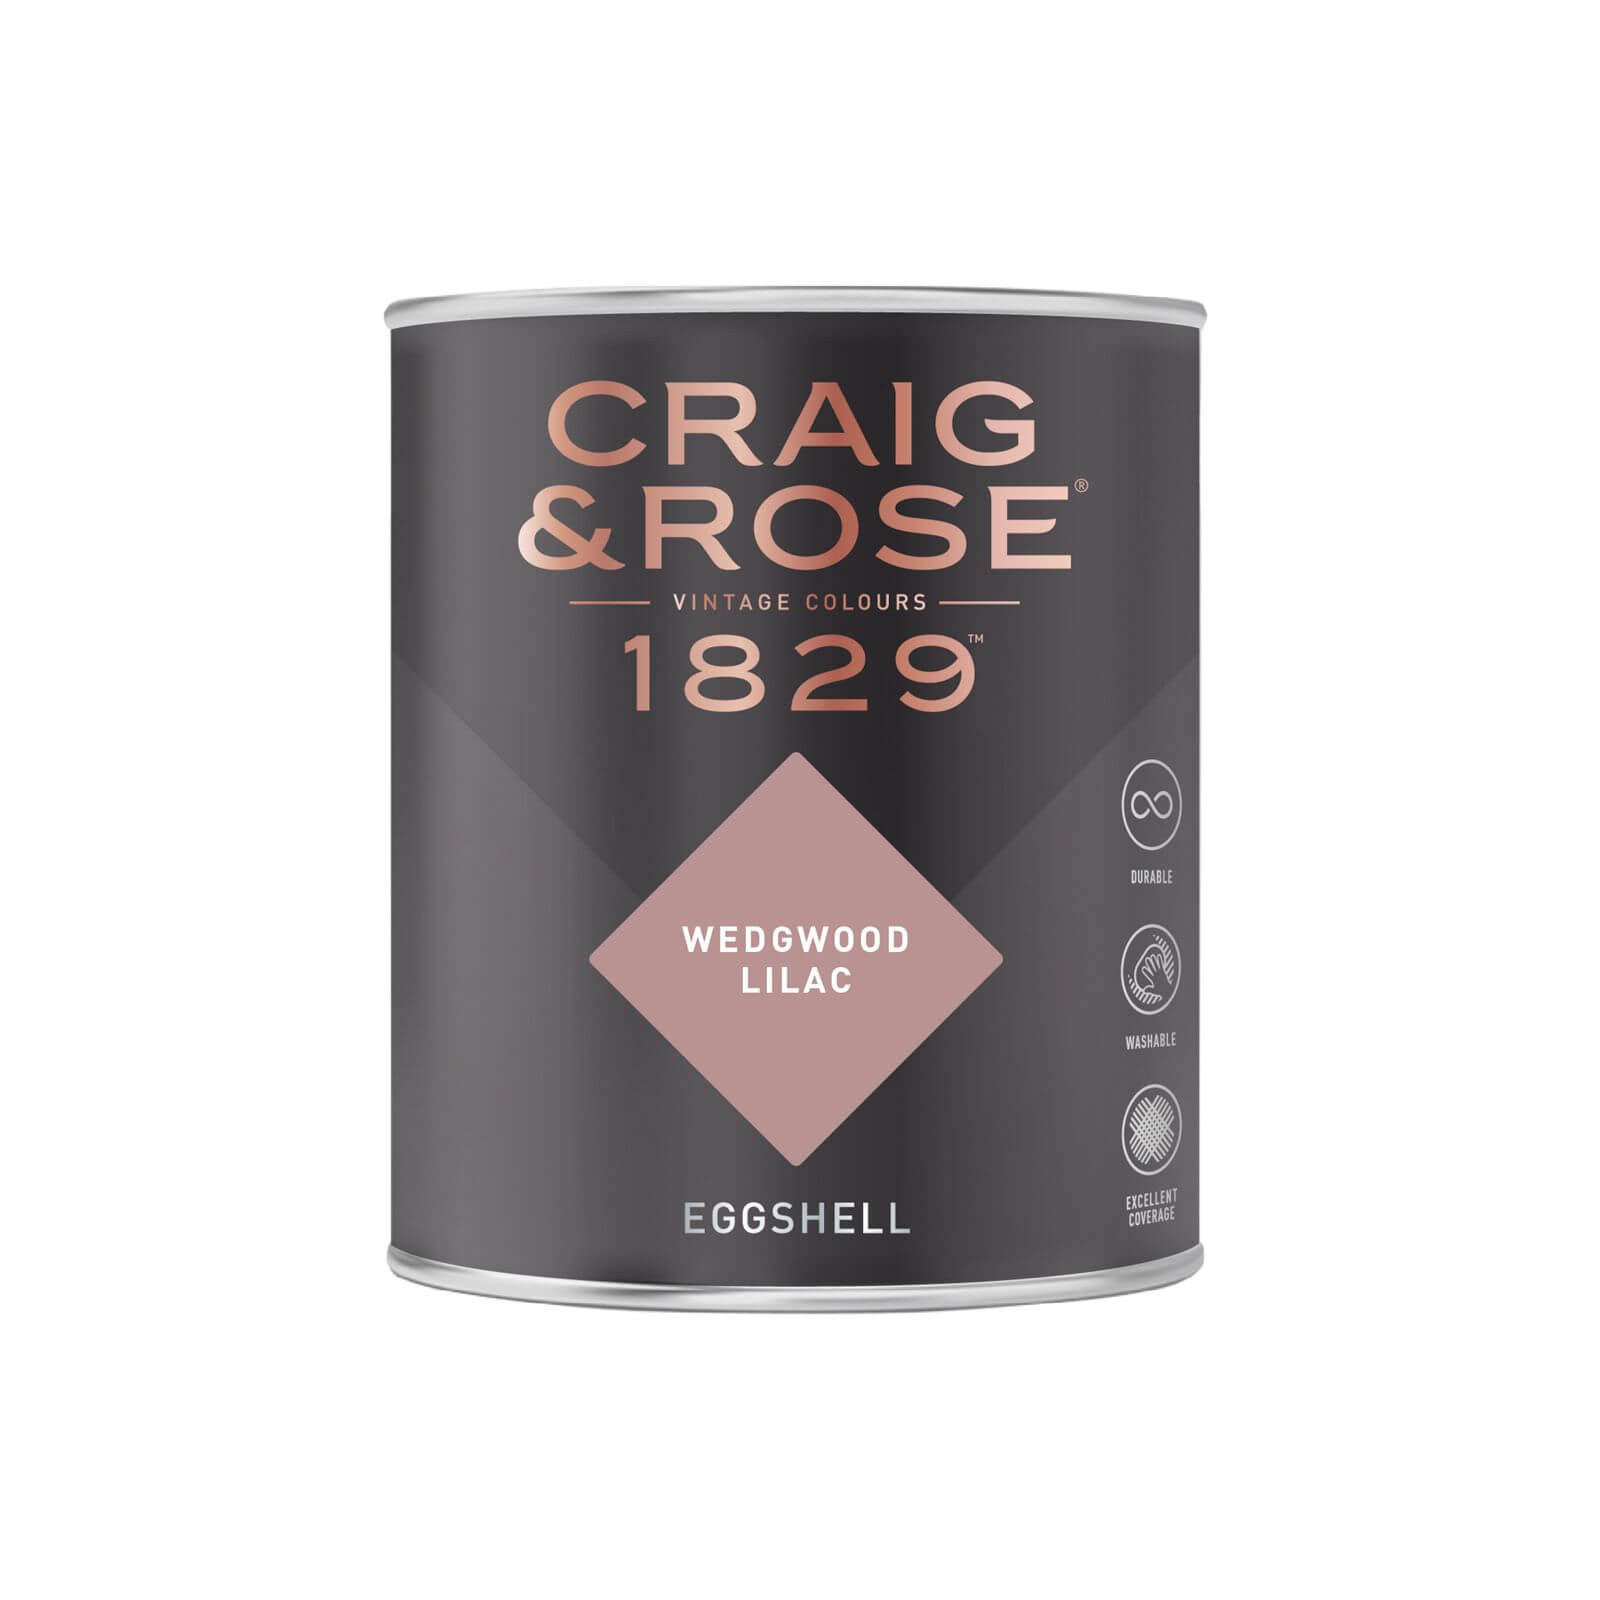 Craig & Rose 1829 Eggshell Paint Wedgwood Lilac - 750ml